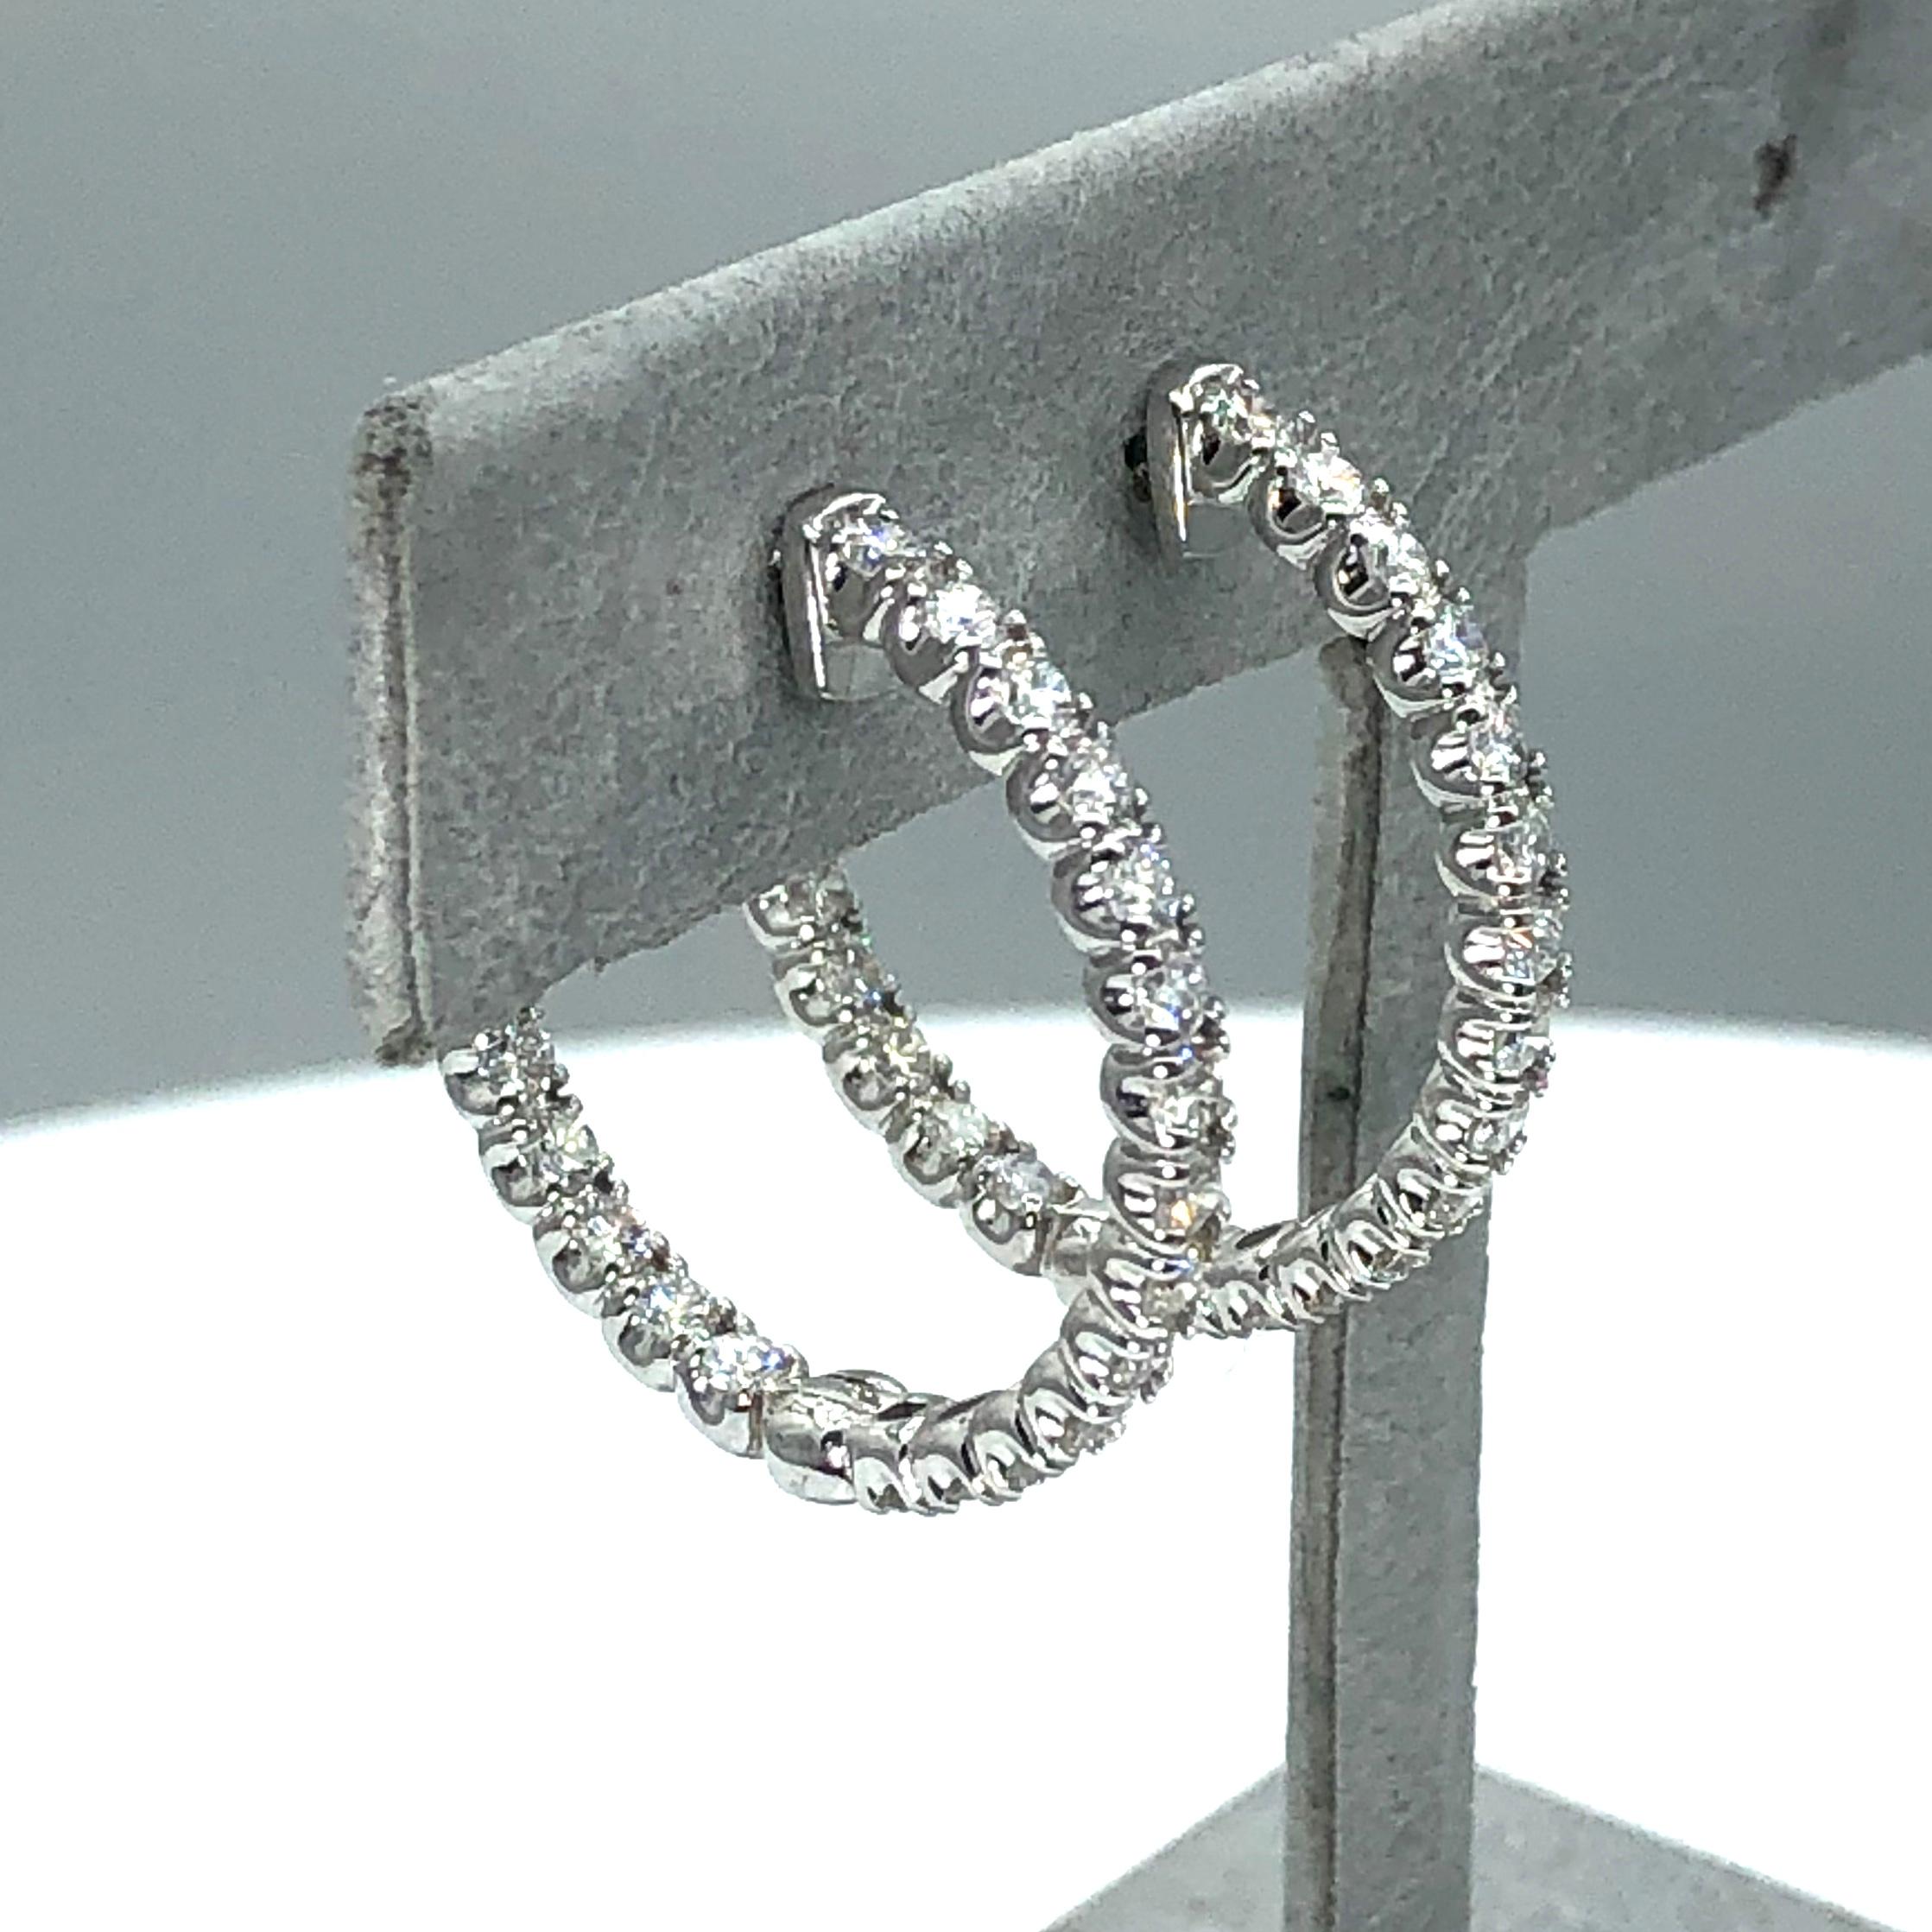 1 4 carat diamond earrings